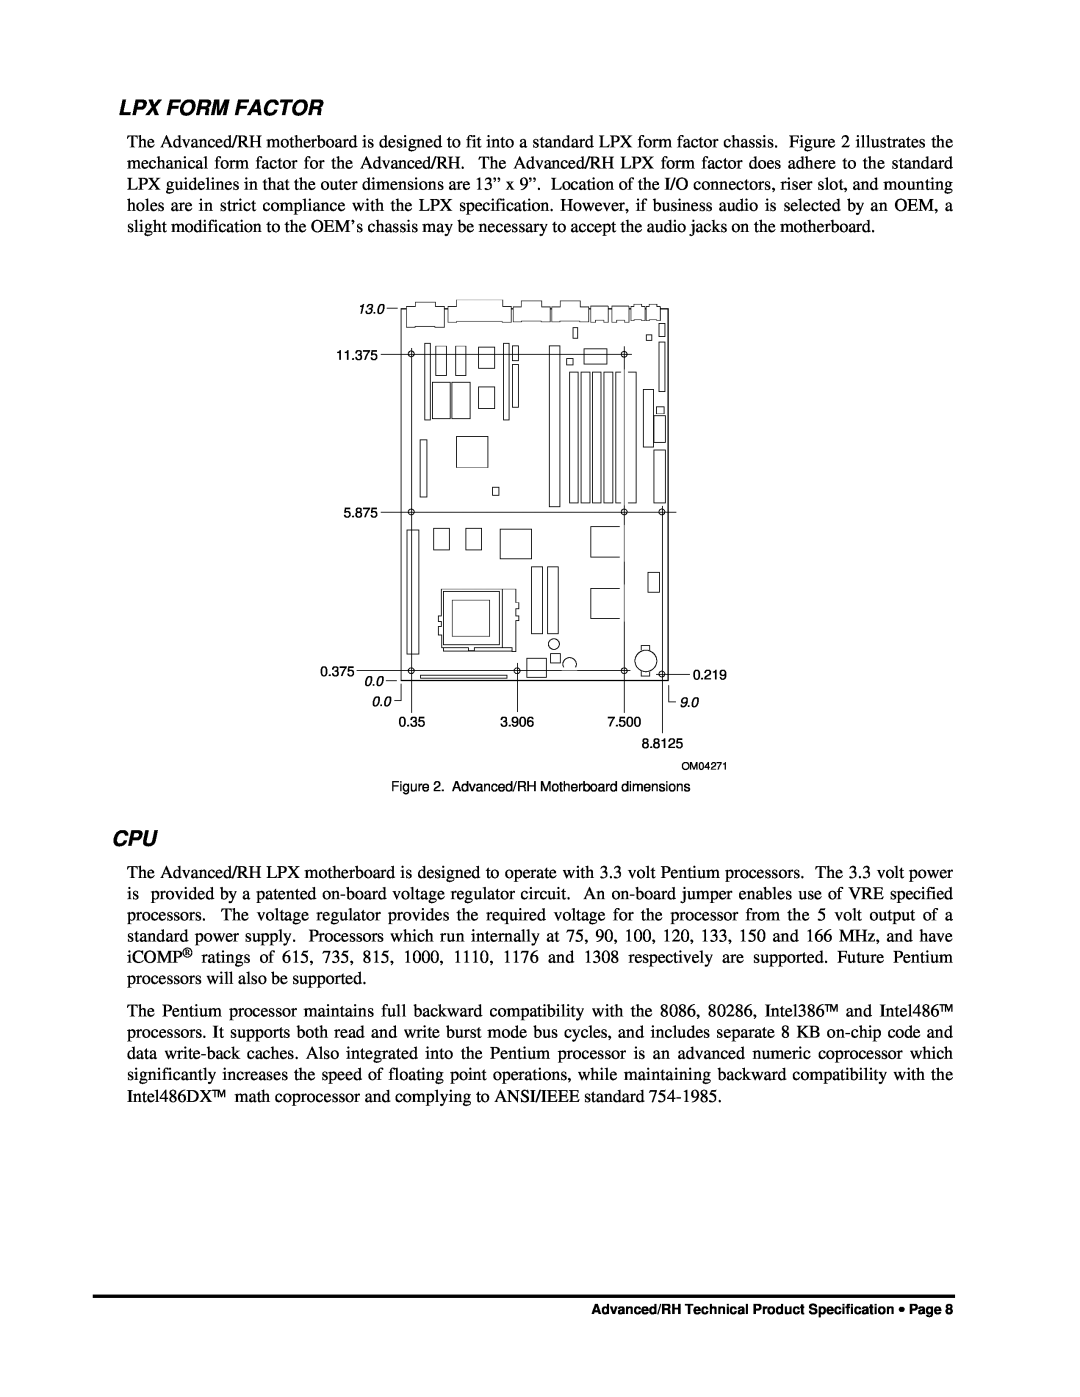 Intel 281809-003 manual Lpx Form Factor, Advanced/RH Motherboard dimensions 